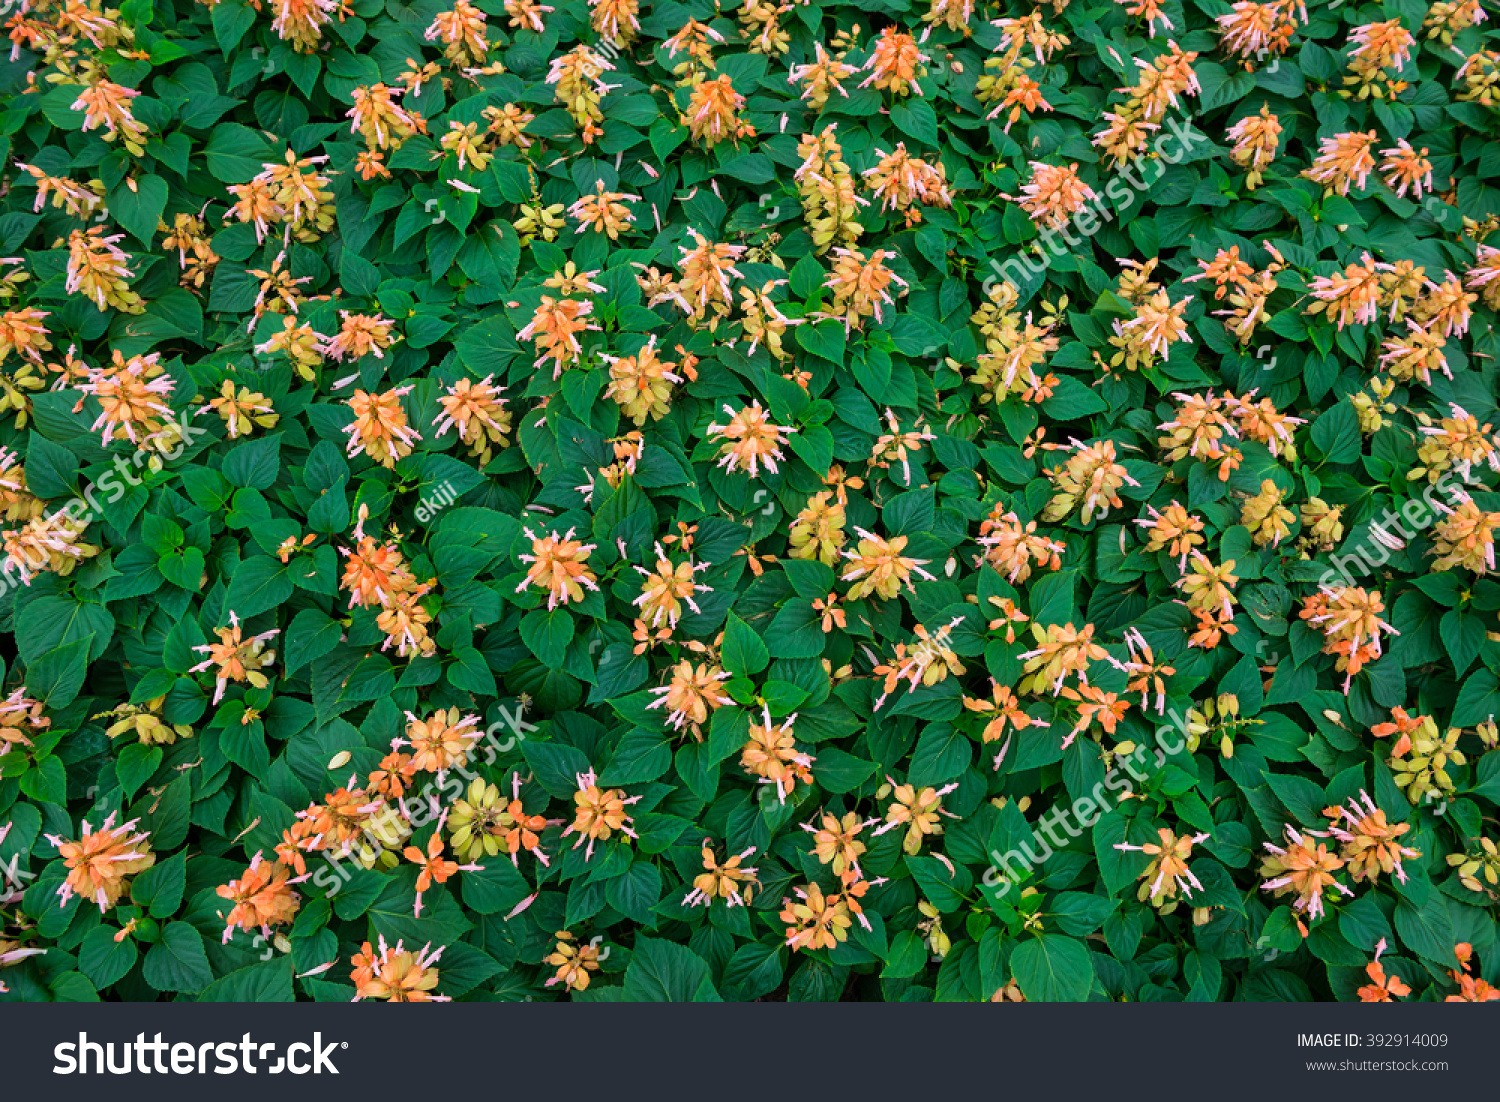 wallpaper orange flower with green leaf #392914009